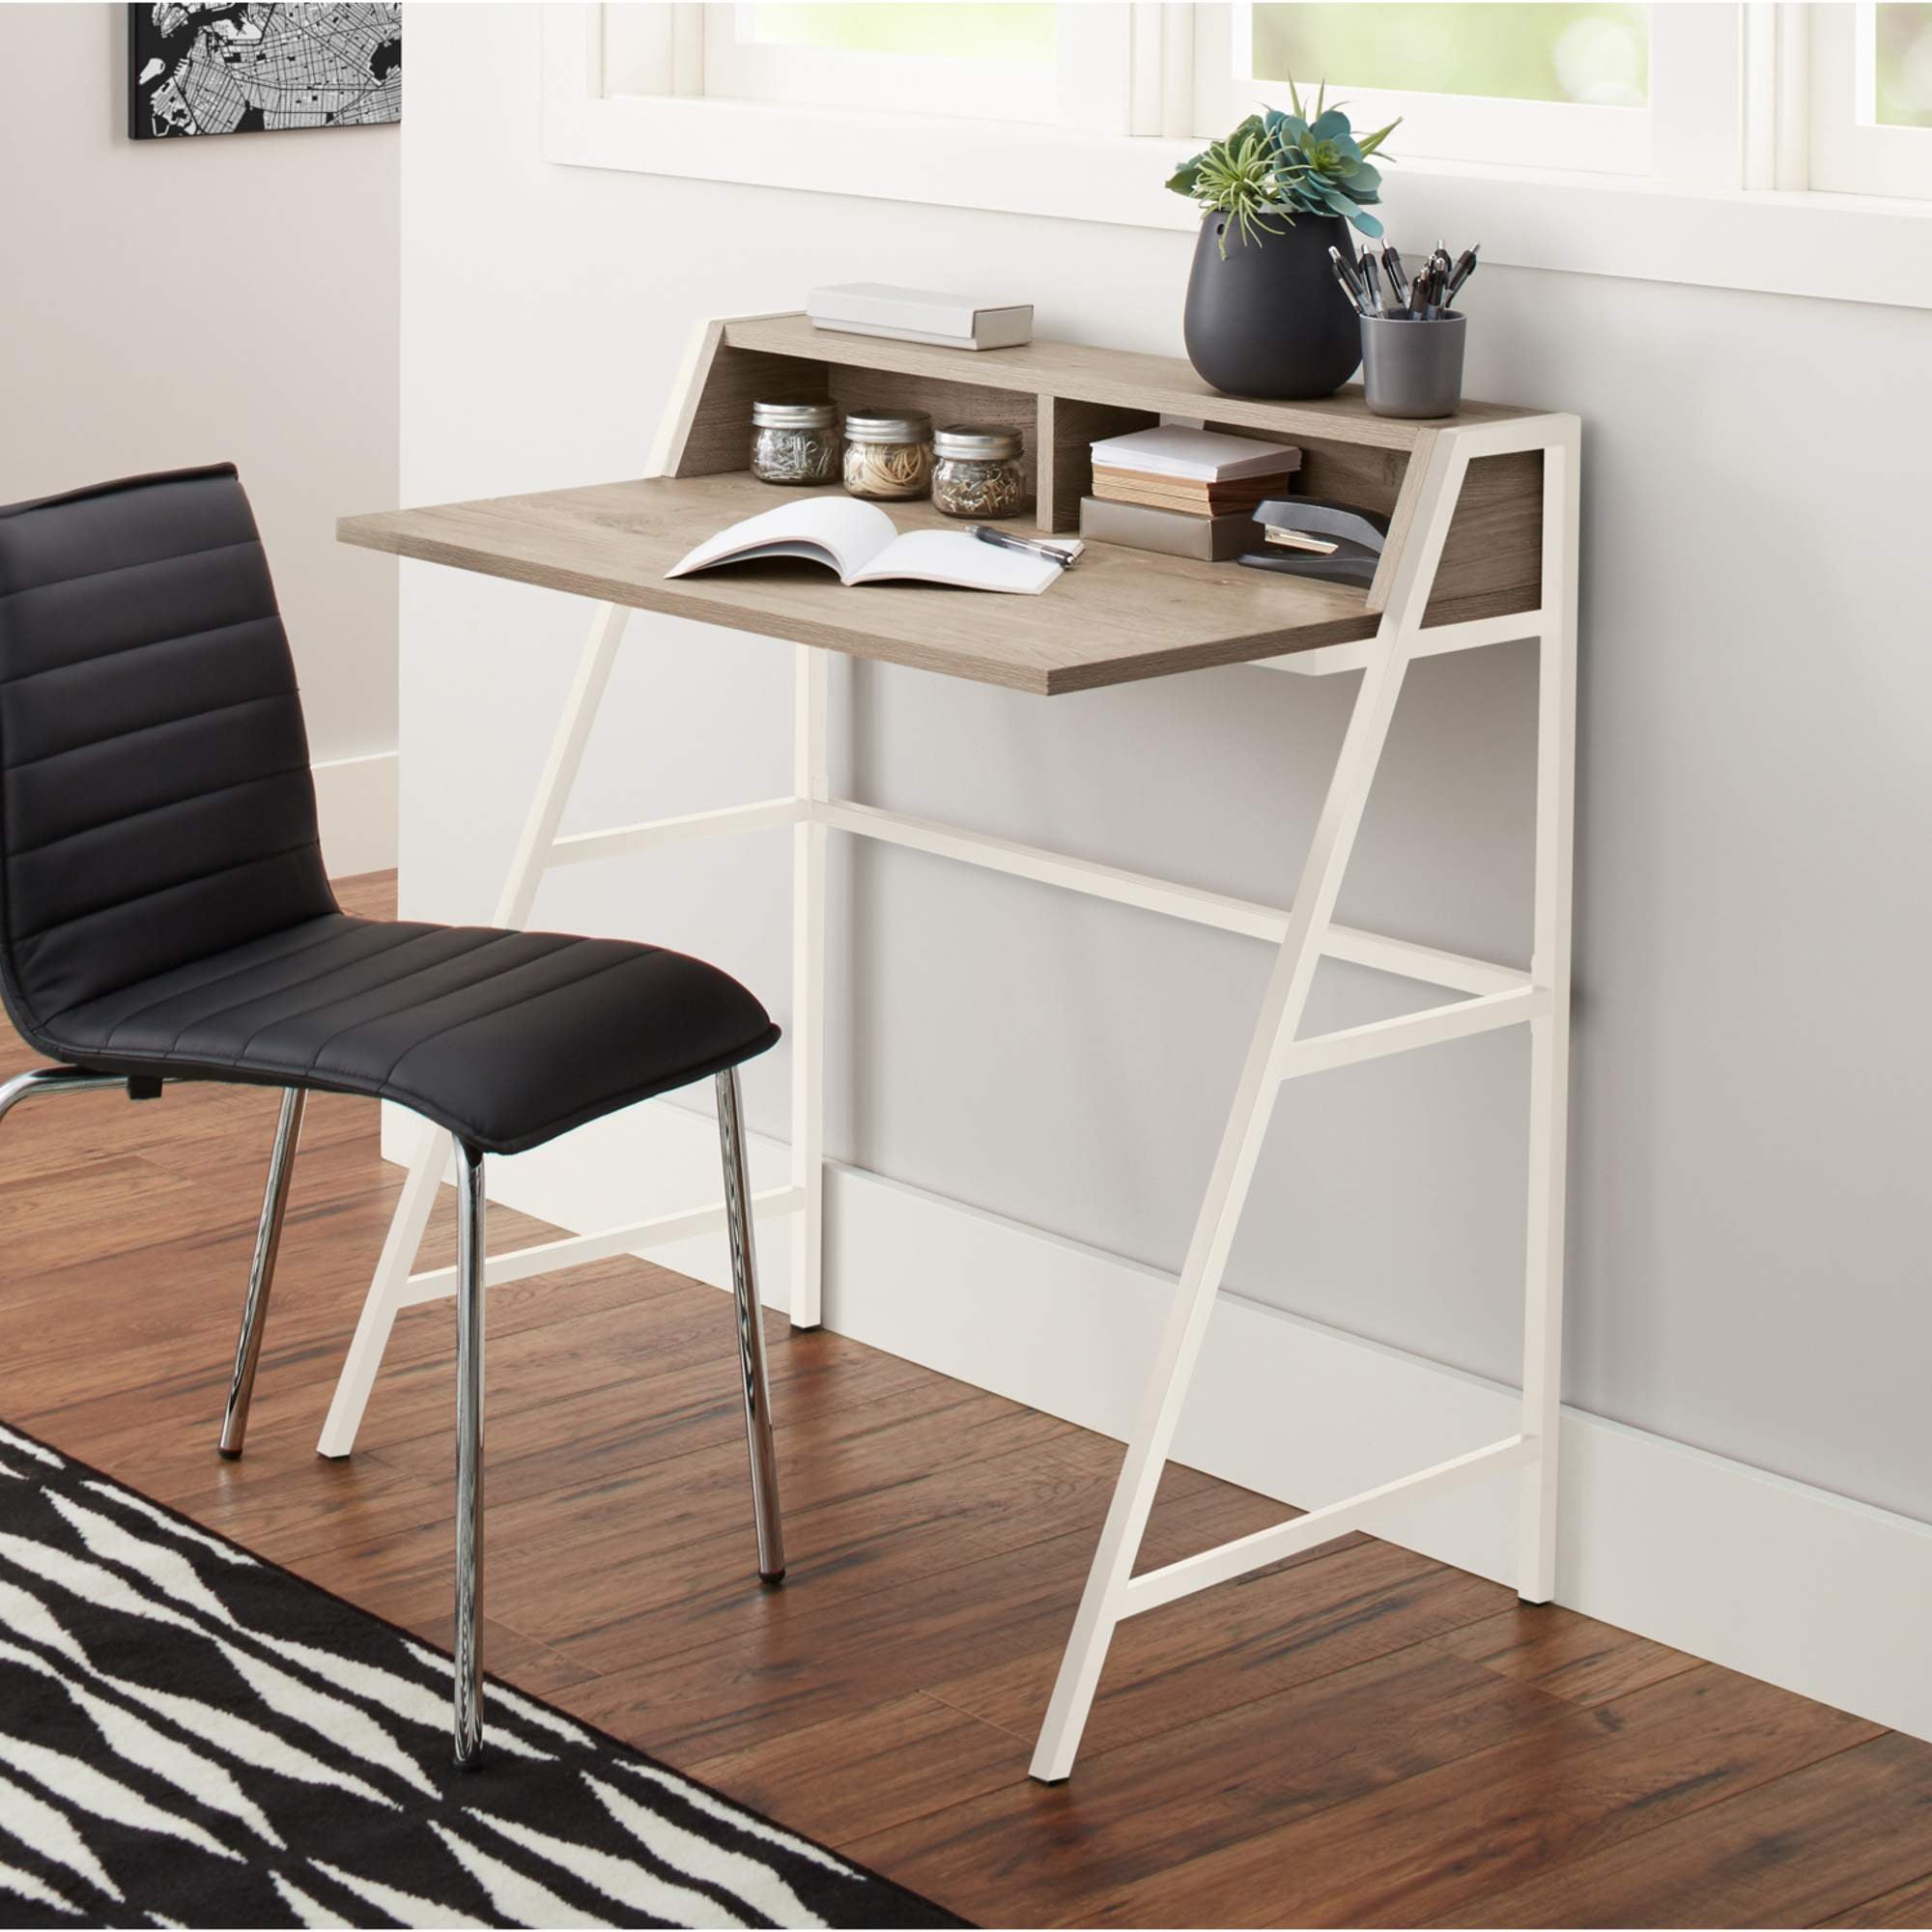 Mainstays Conrad Desk With Hutch 21 Stylish Office Furniture